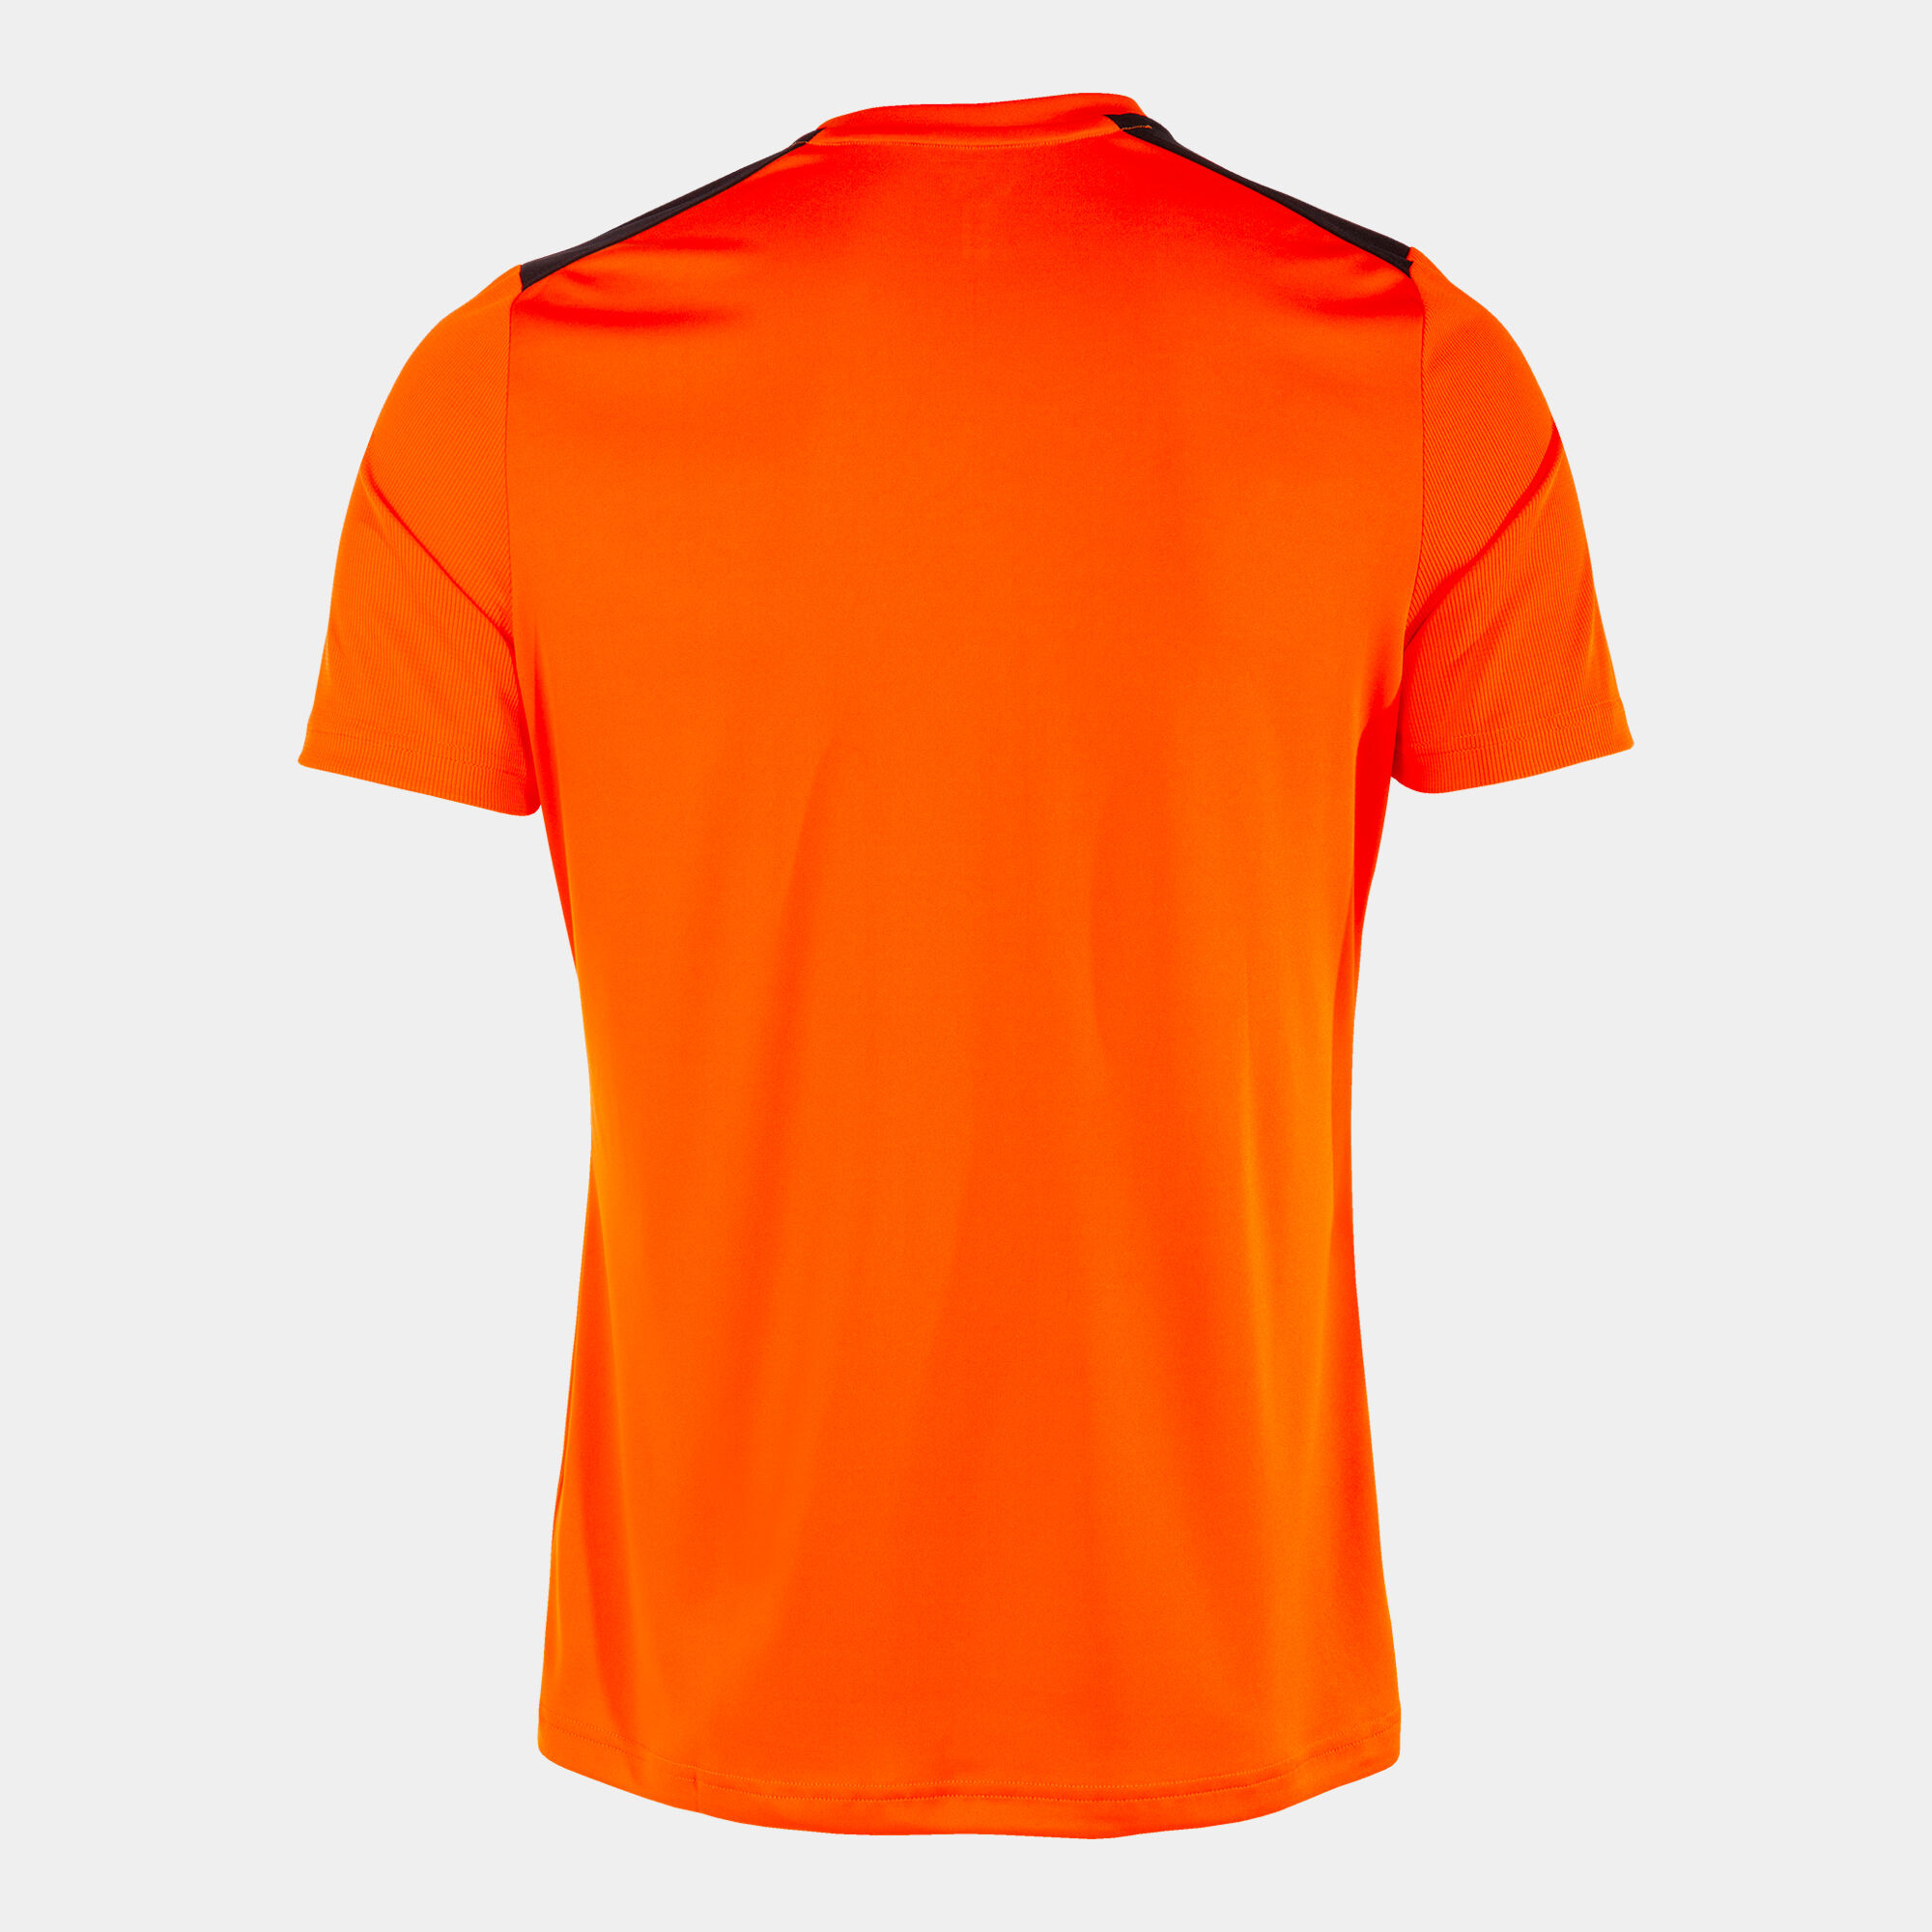 Camiseta manga corta hombre Championship VII naranja negro